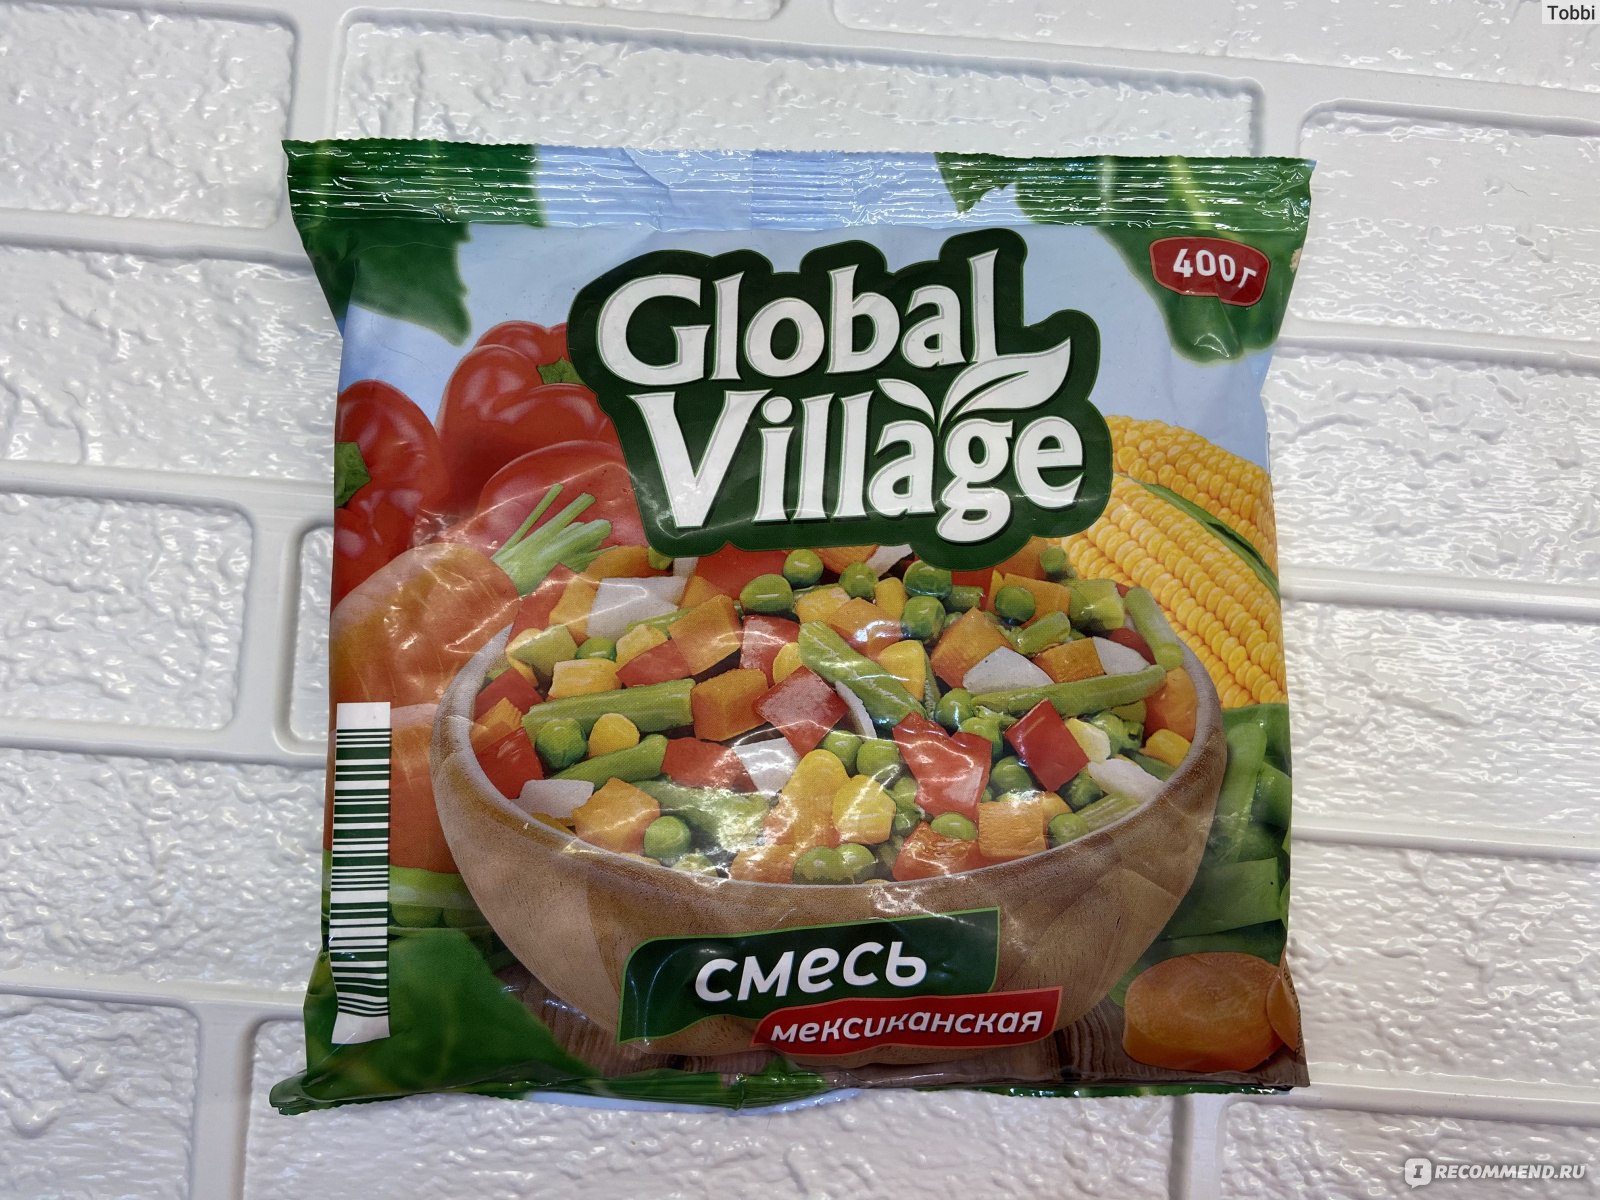 Global village суп. Мексиканская смесь овощей Global Village. Мексиканская смесь Глобал Виладж. Смесь овощная Global Village Мексиканская 400г. Смесь Мексиканская, Global Village, 400 г.